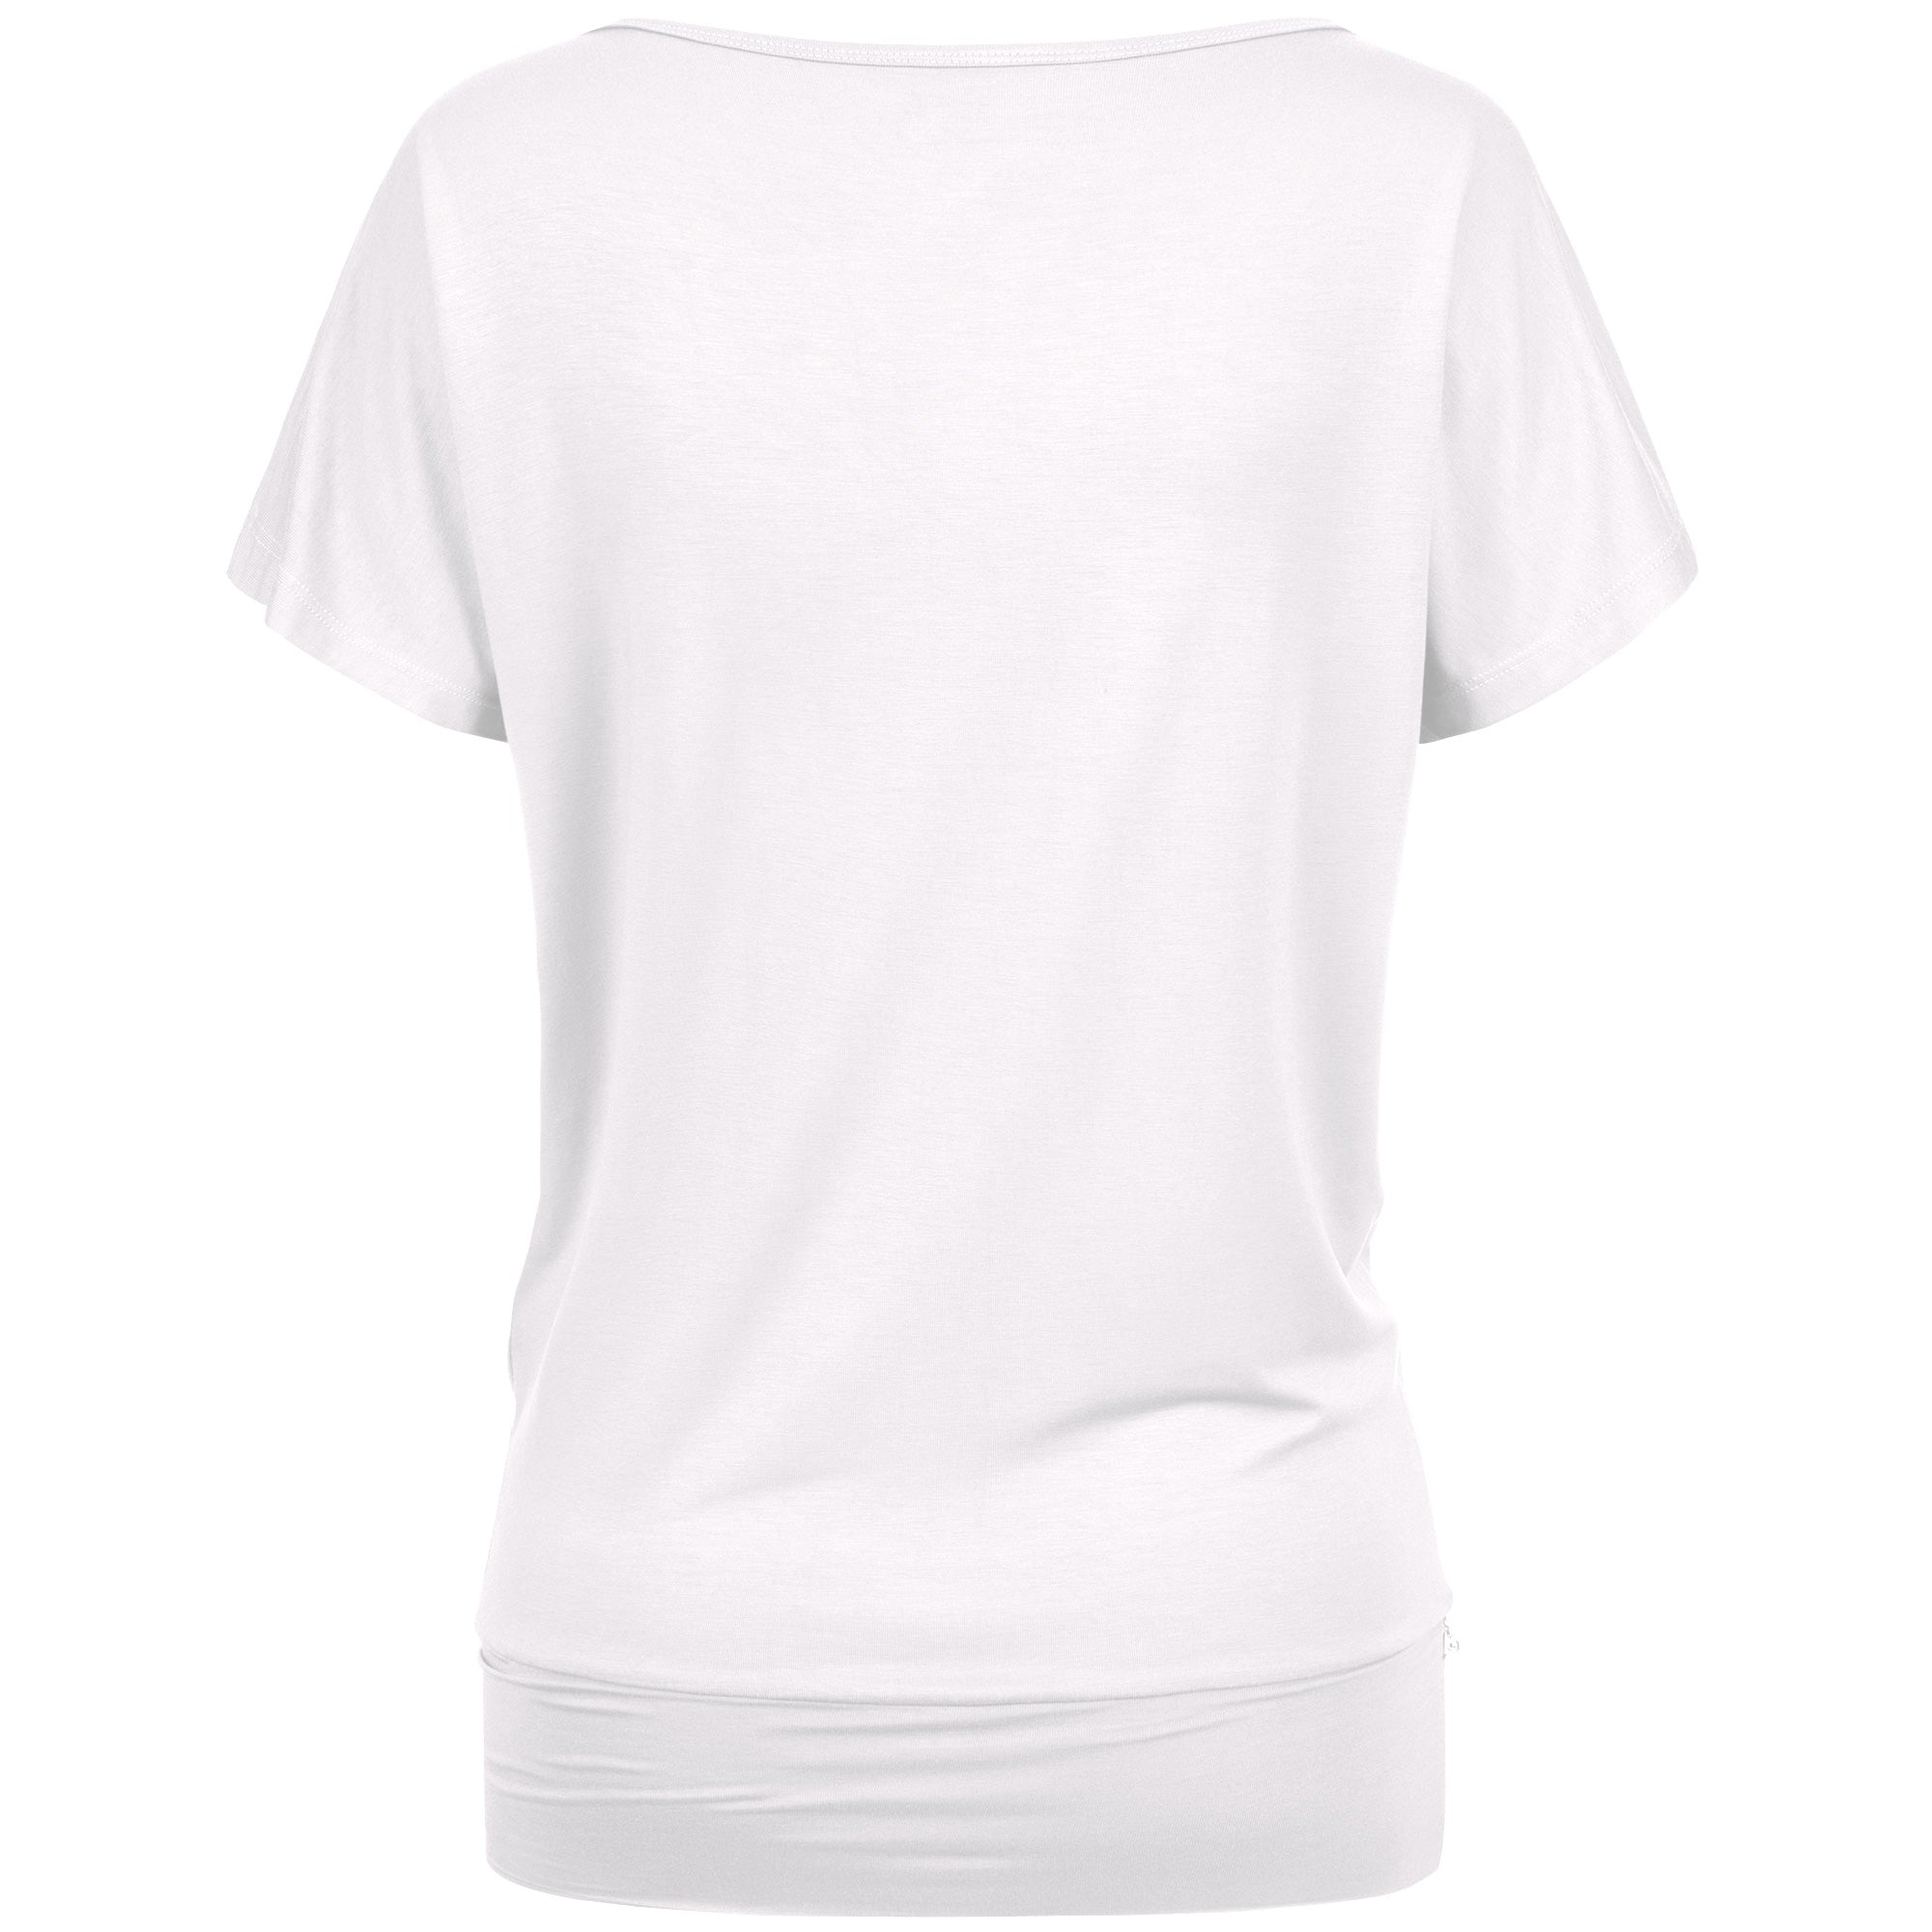 Yoga Shirt White